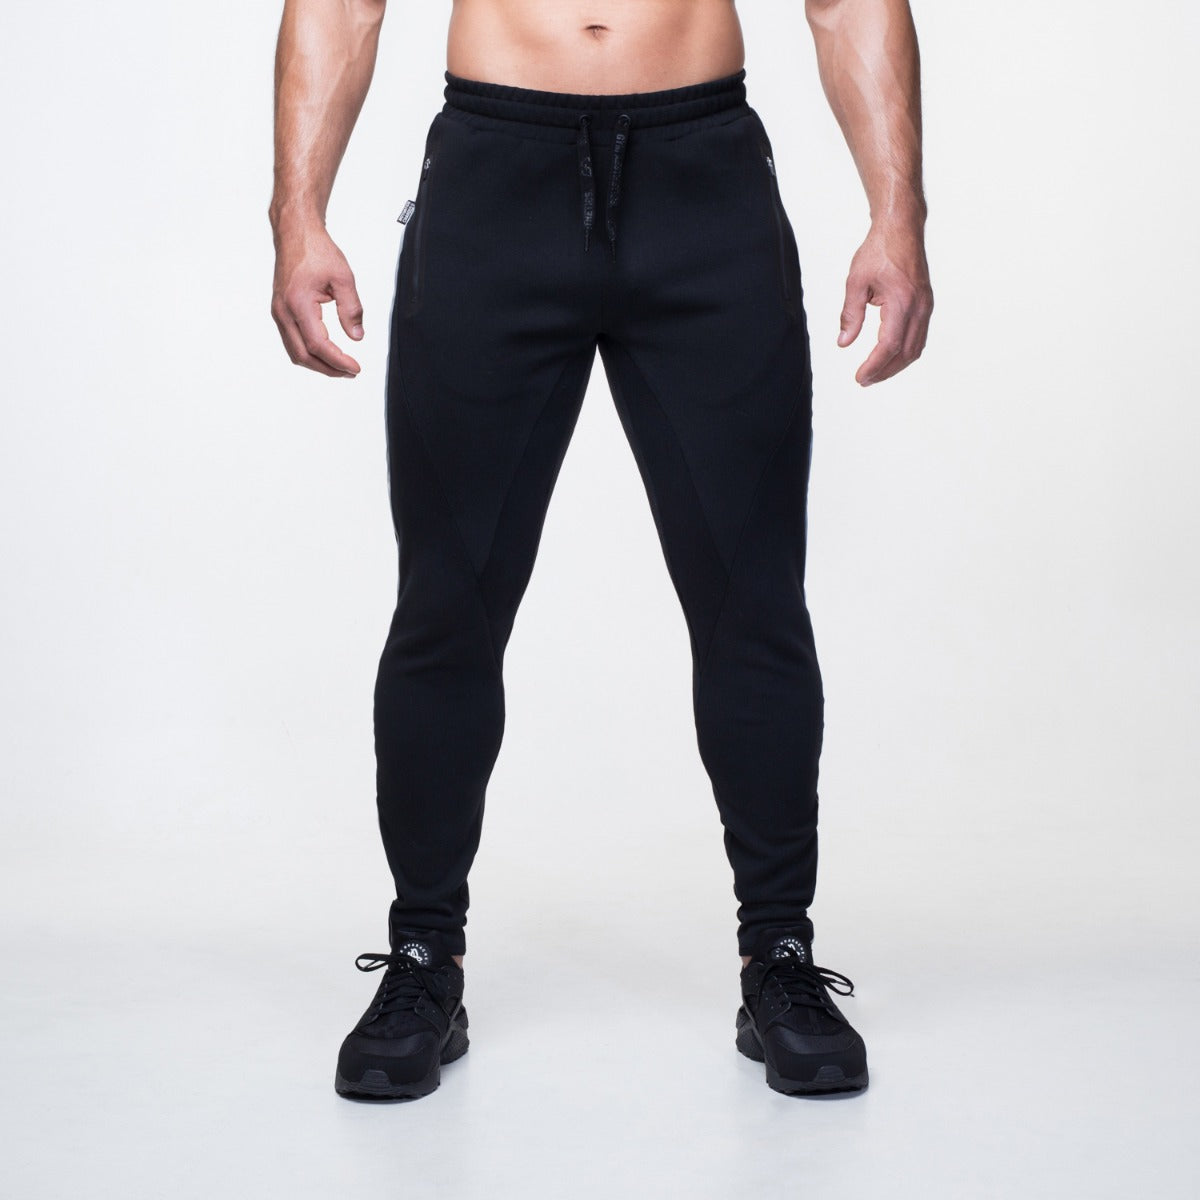 Men's Pants | Gym Aesthetics